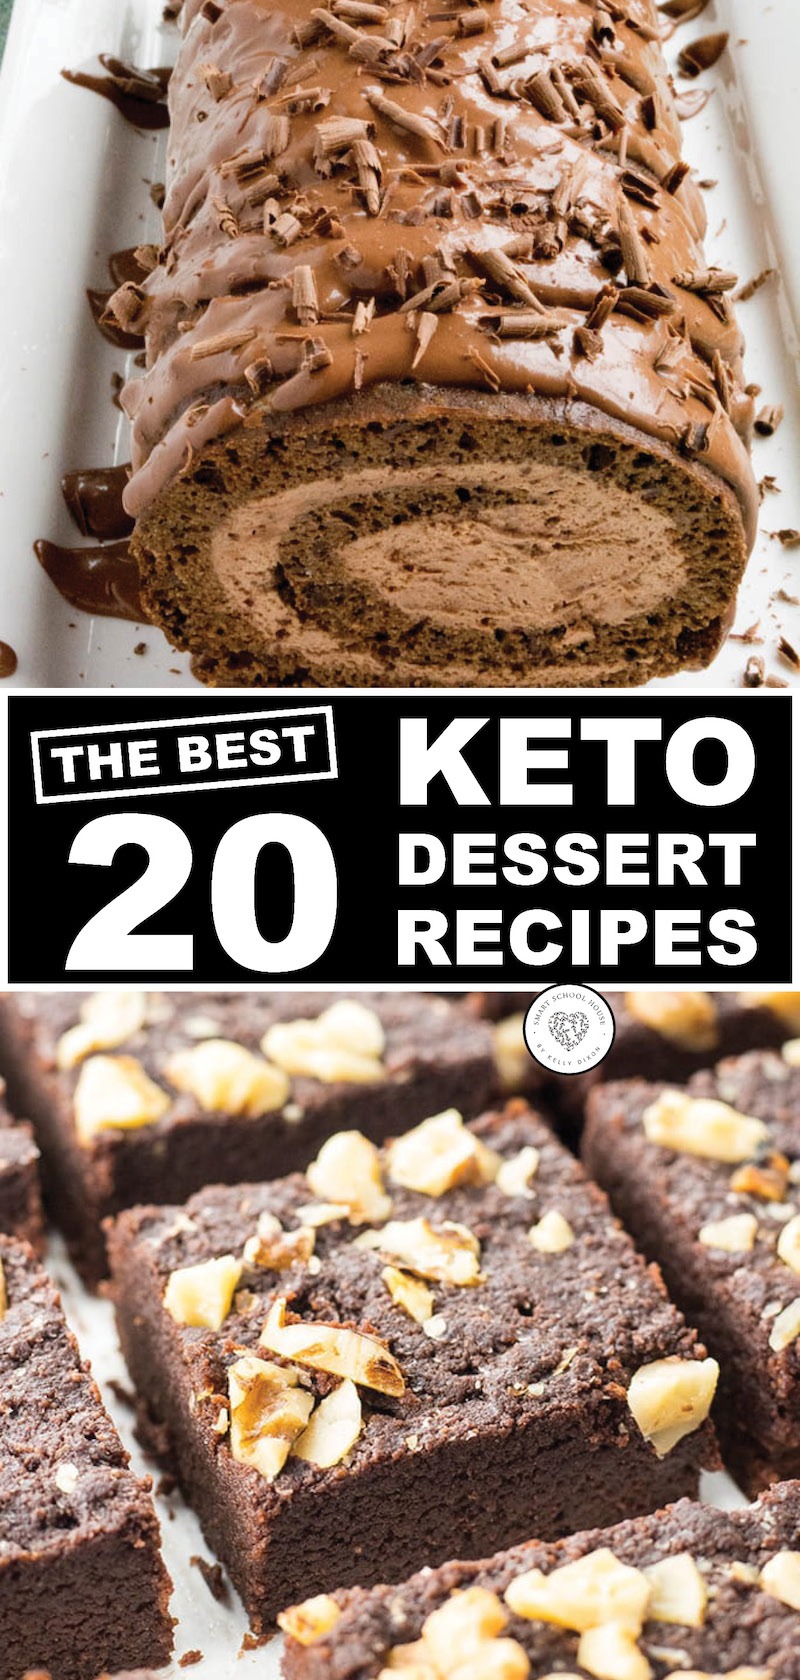 KETO Dessert Recipe Ideas! The BEST Keto Desserts